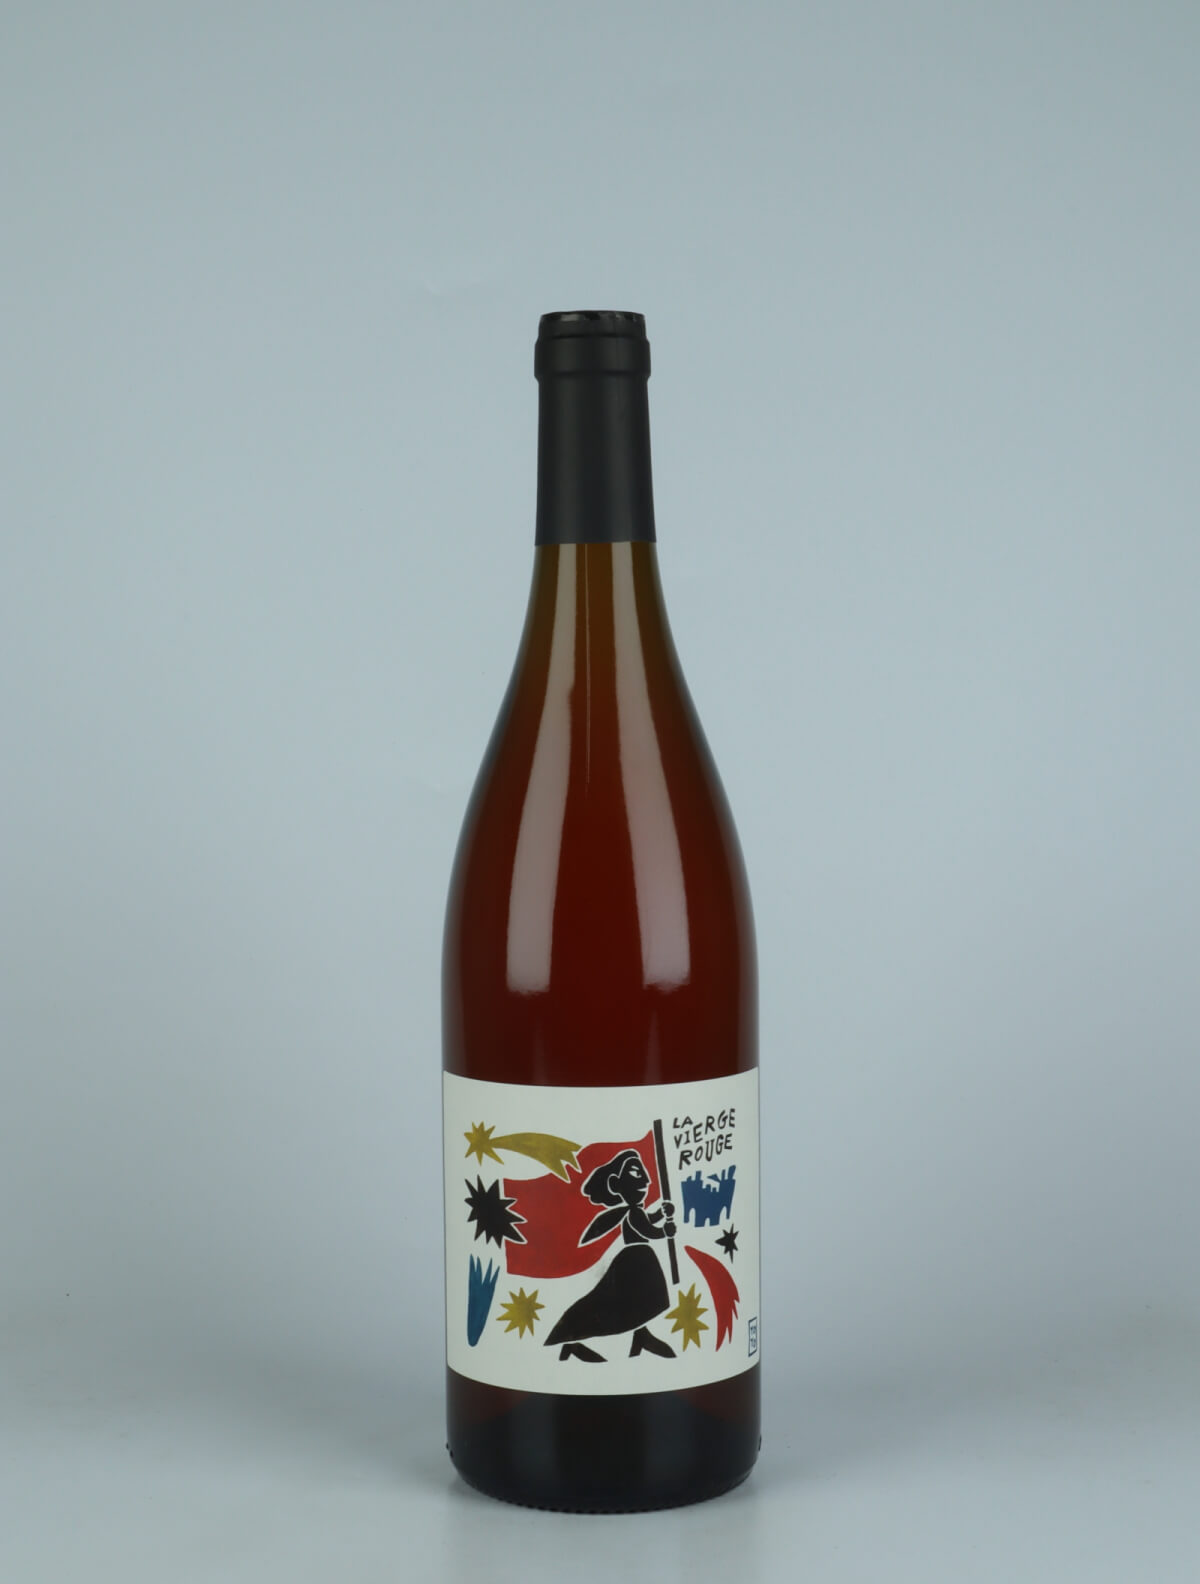 En flaske 2023 La Vierge Rouge Orange vin fra Domaine Yoyo, Rousillon i Frankrig